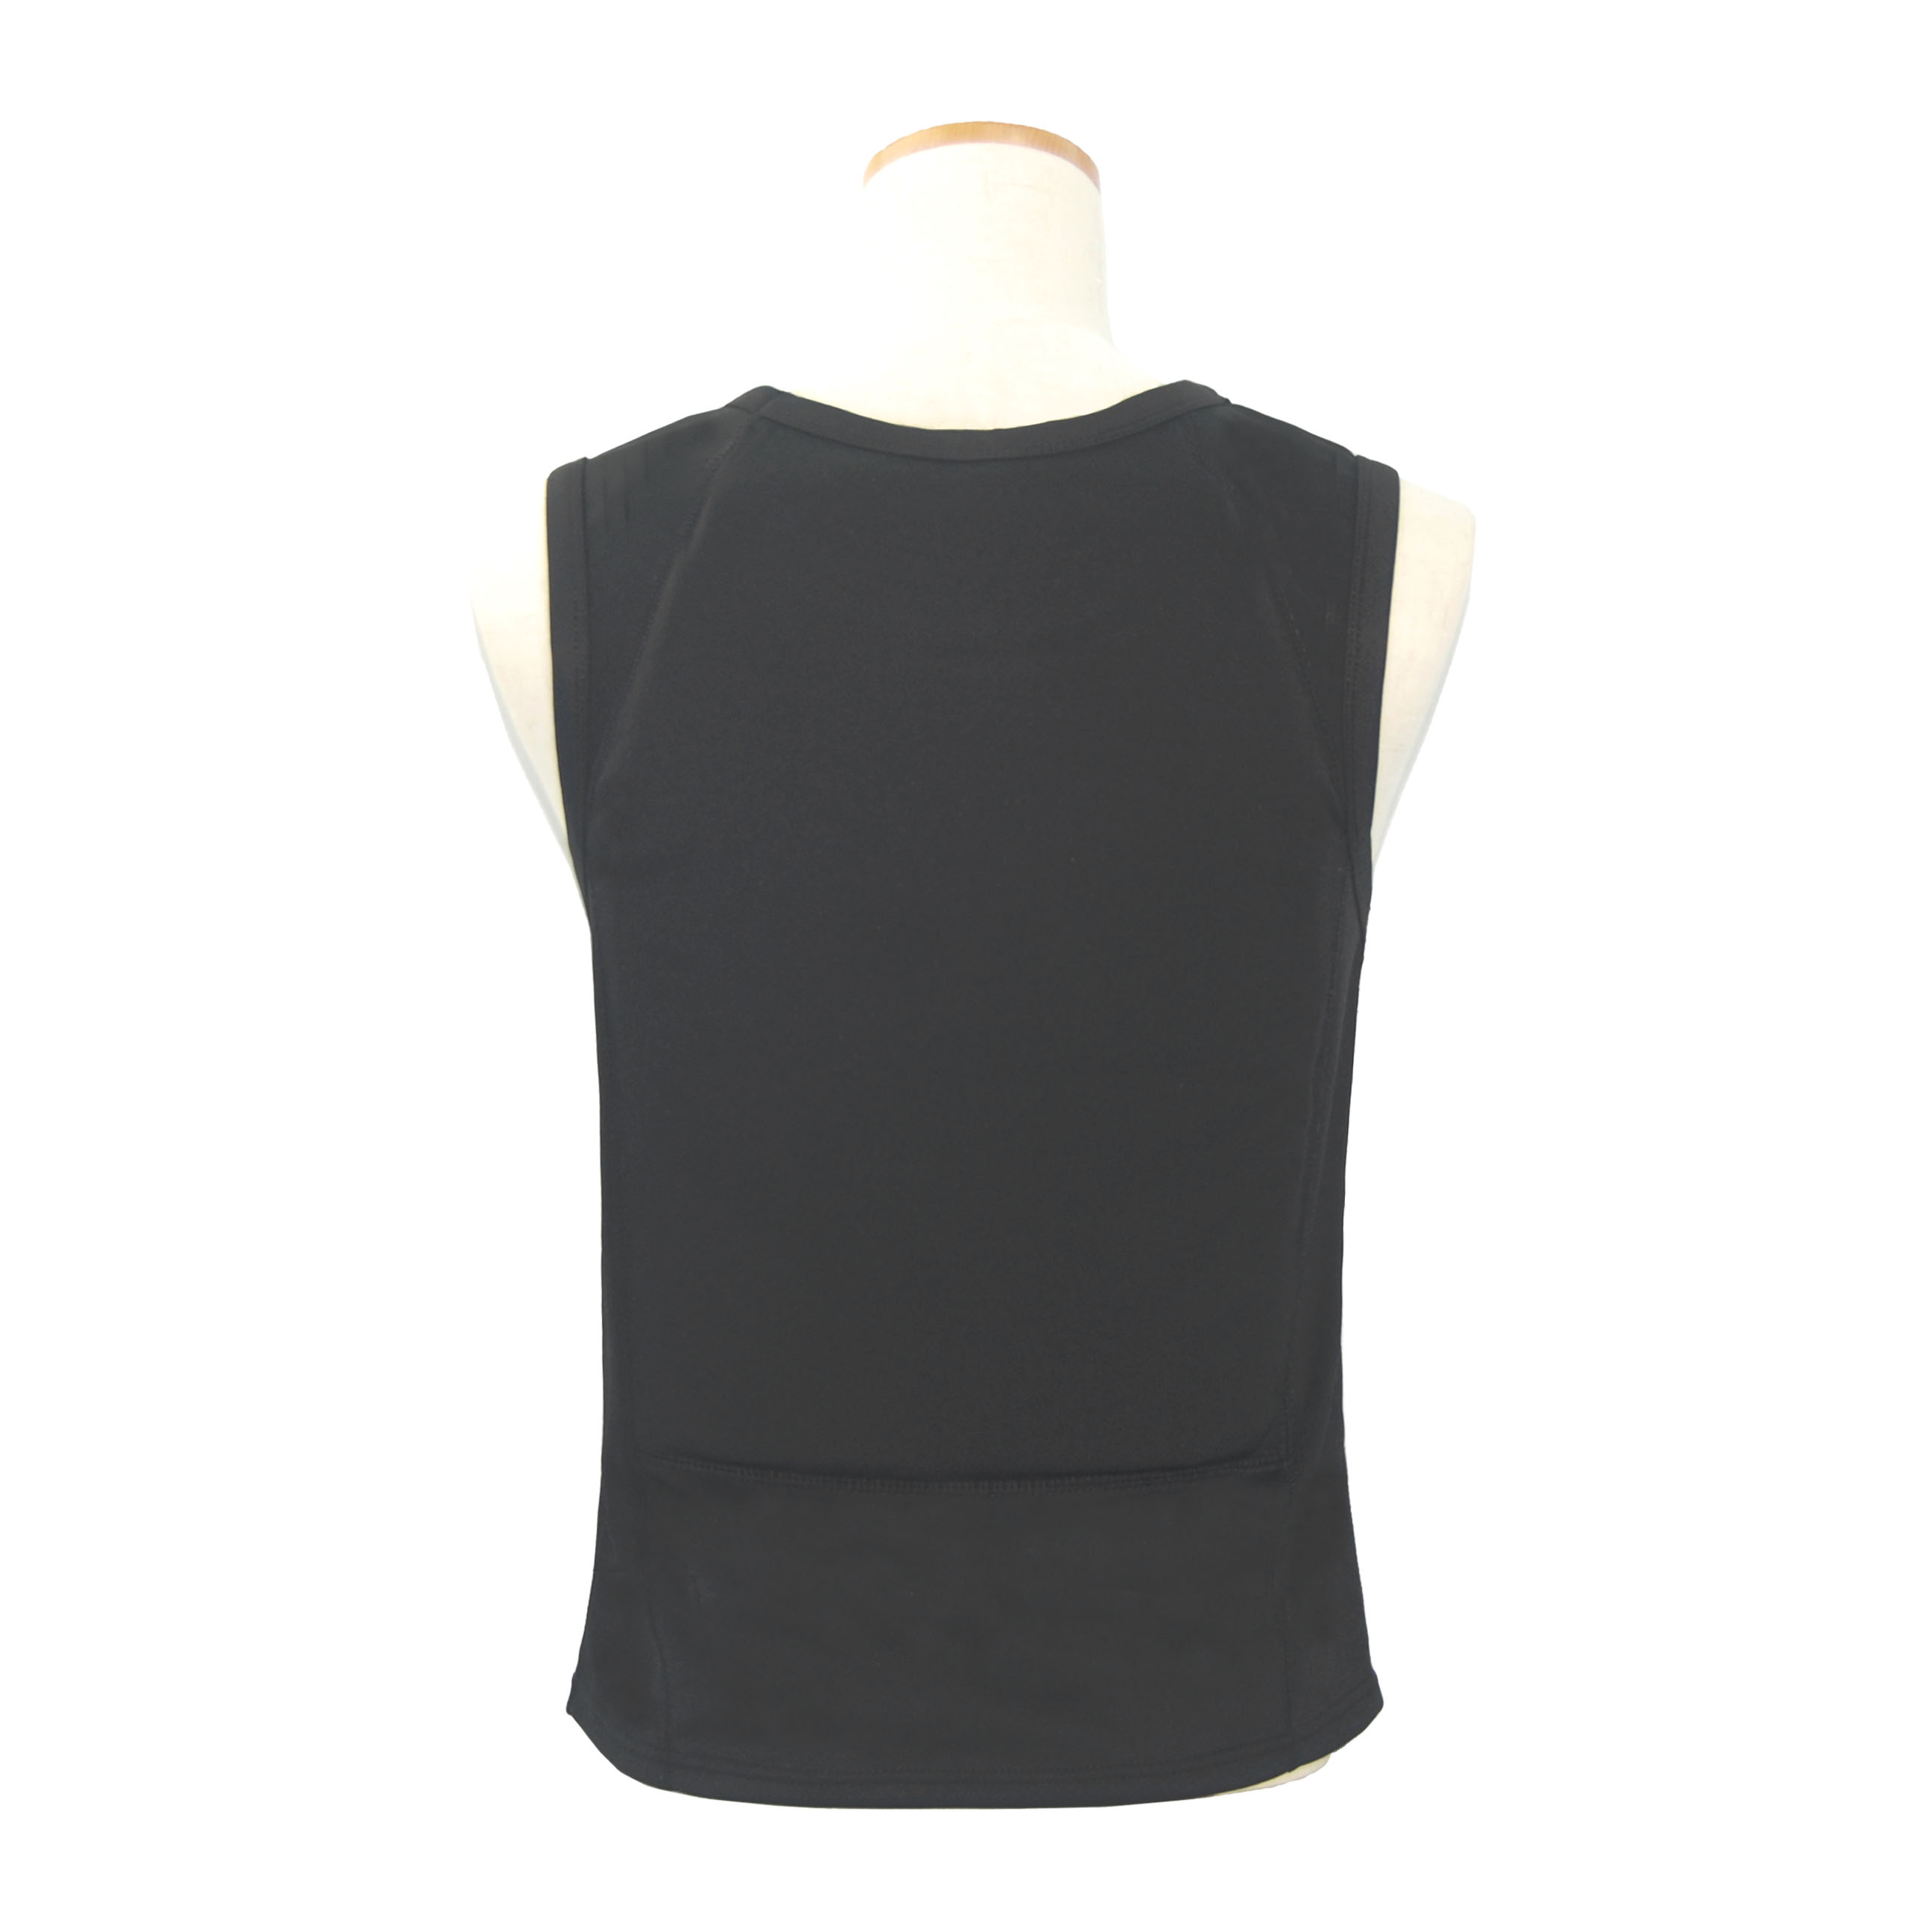 Bulletproof Vest IIIA level Ultra-comfortable Lightweight Concealed Hidden Inside Wear Soft Anti-Bullet T shirt Work Clothes